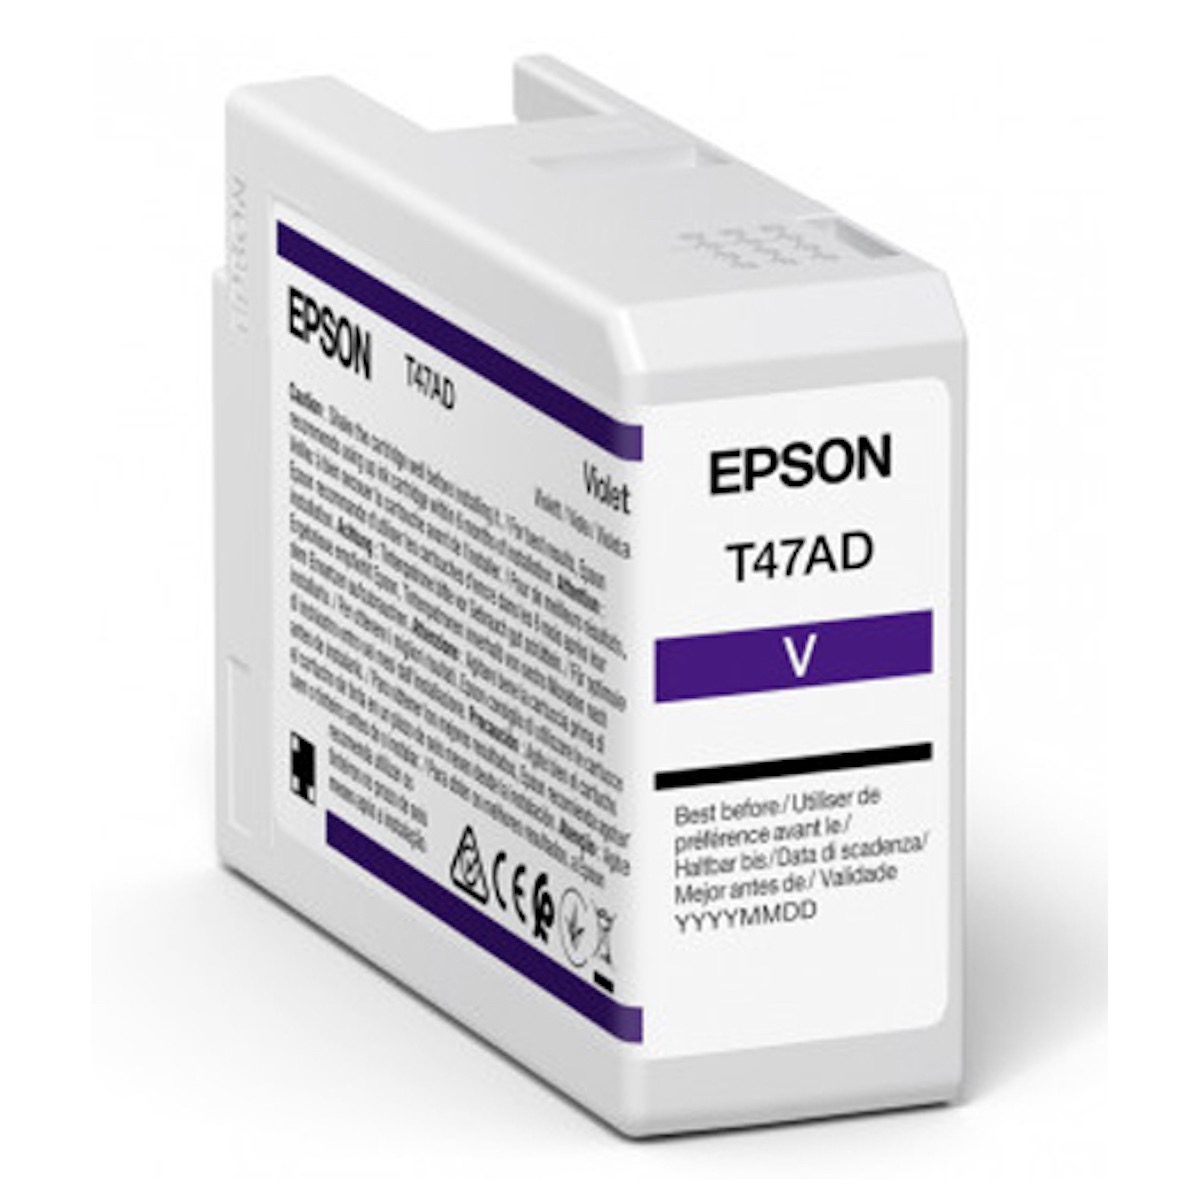 Epson T47AD violet Tinte